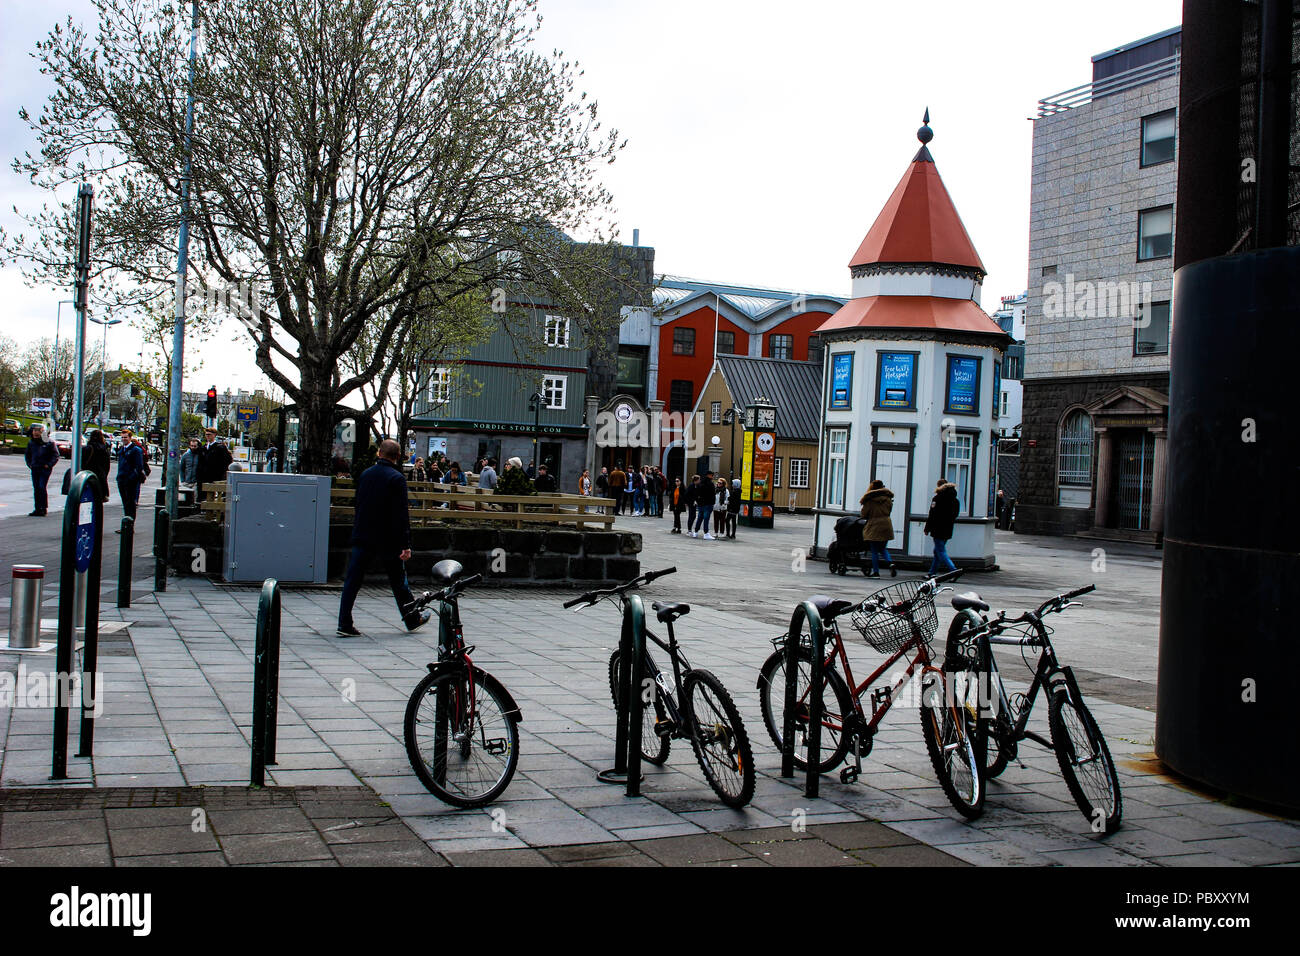 Reykjavik Iceland, May 13 2018: Bikes neaty lined up in a shoppi Stock Photo